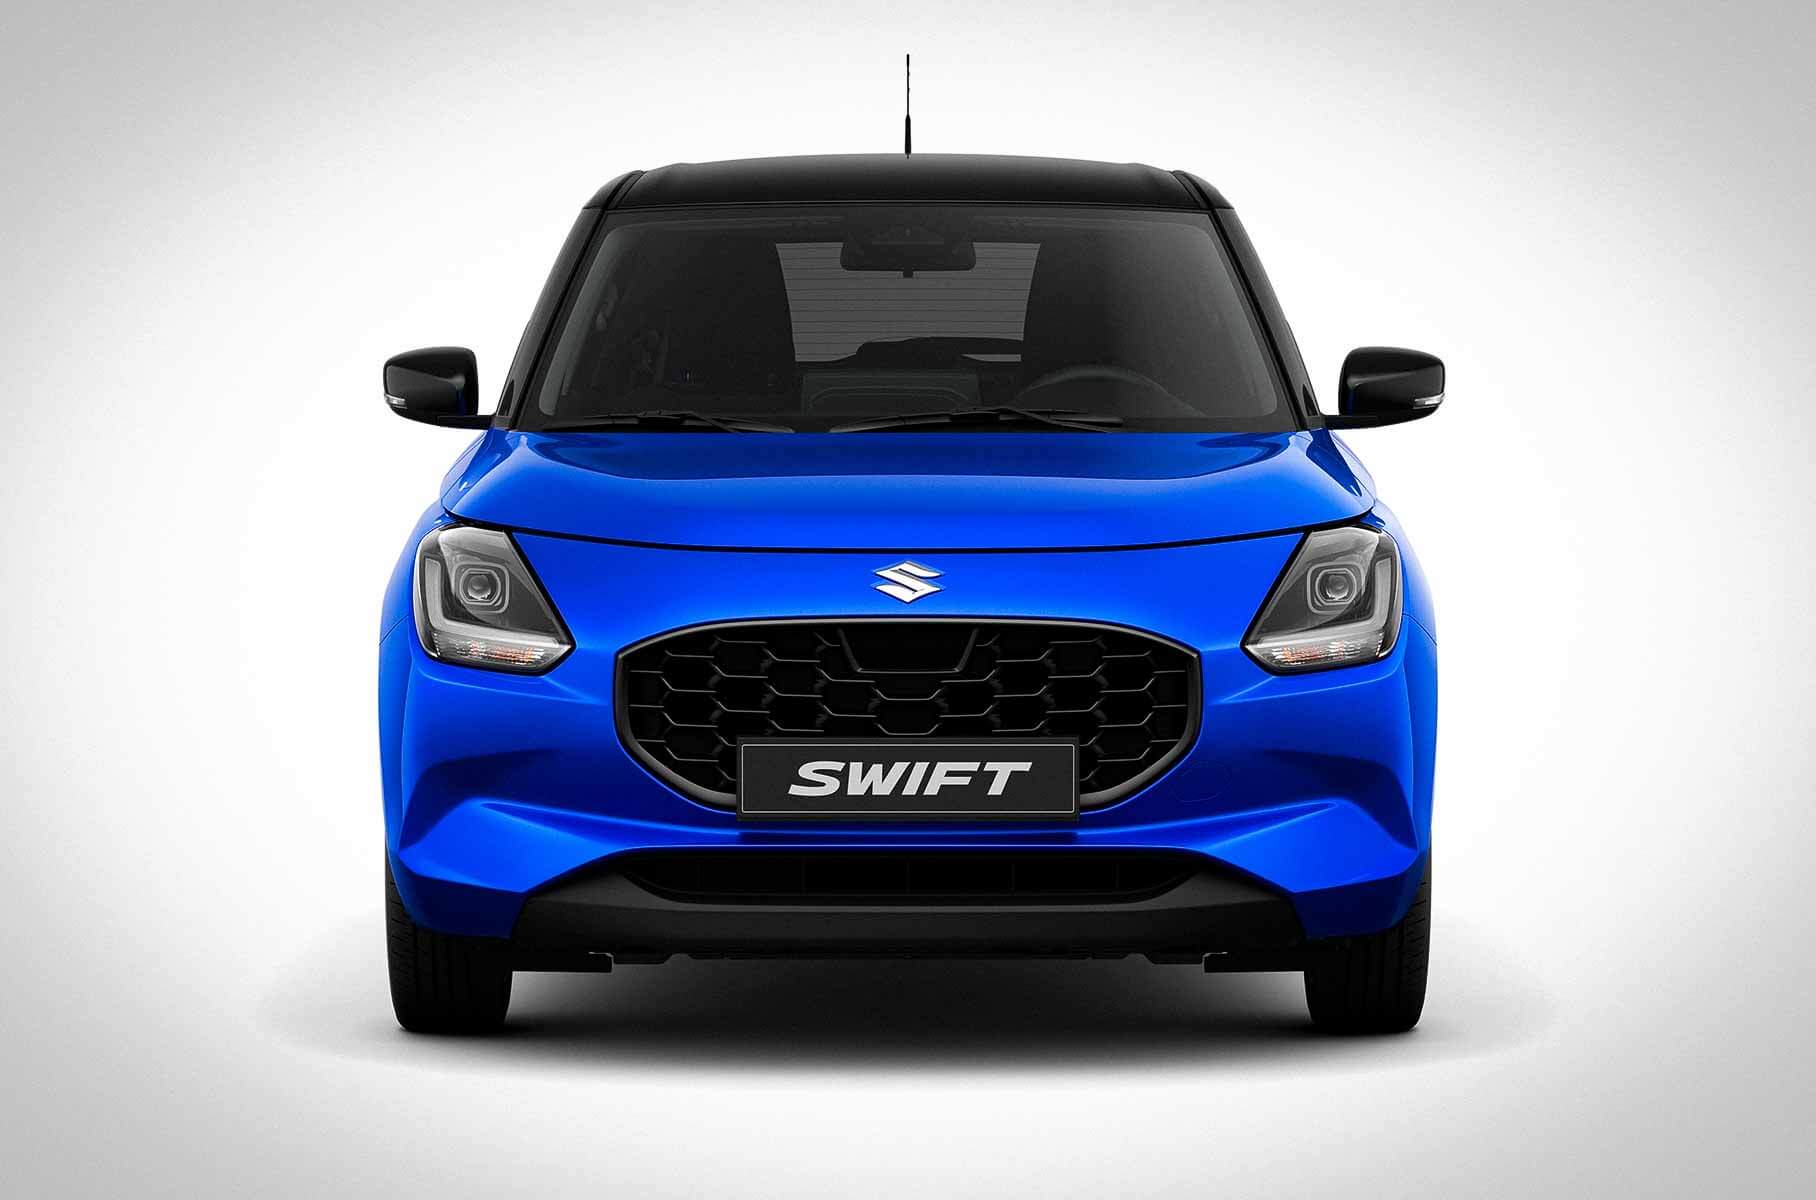 Suzuki introduced the new generation Swift